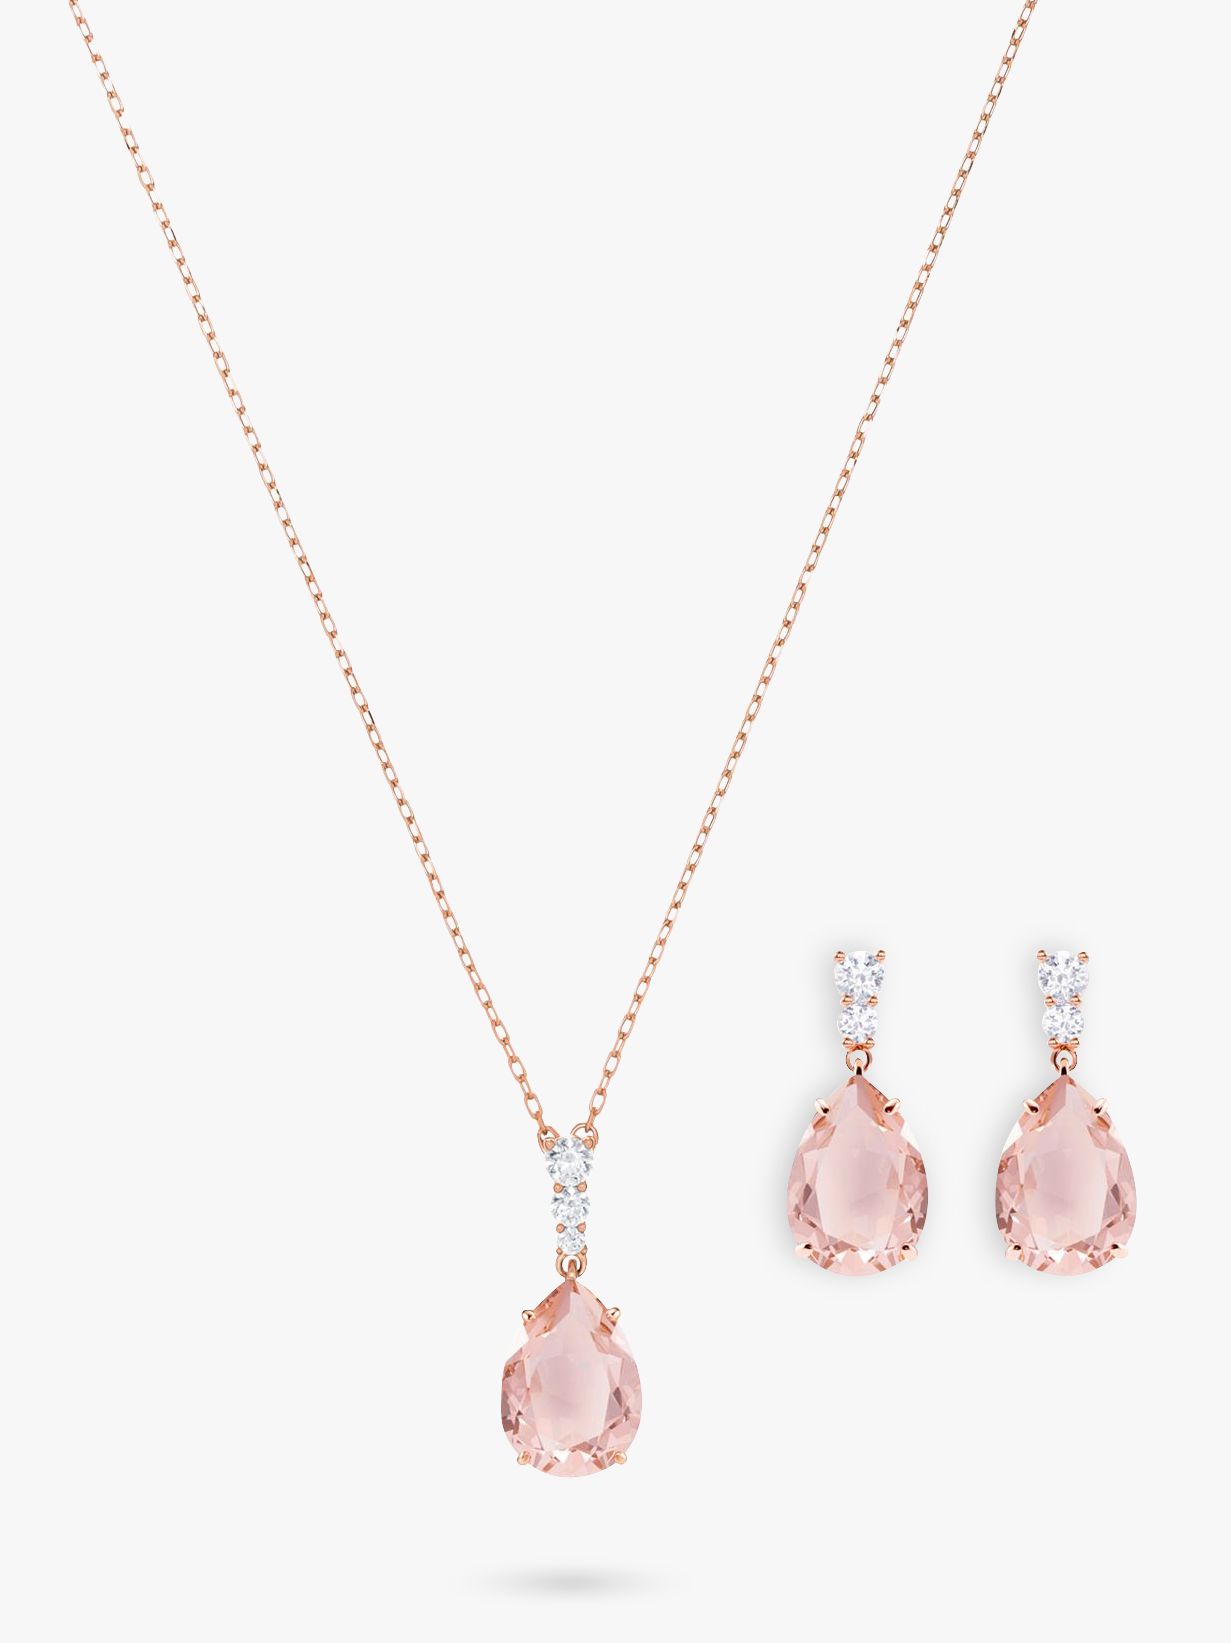 Swarovski Vintage Crystal Teardrop Drop Earrings and Pendant Necklace Jewellery Set